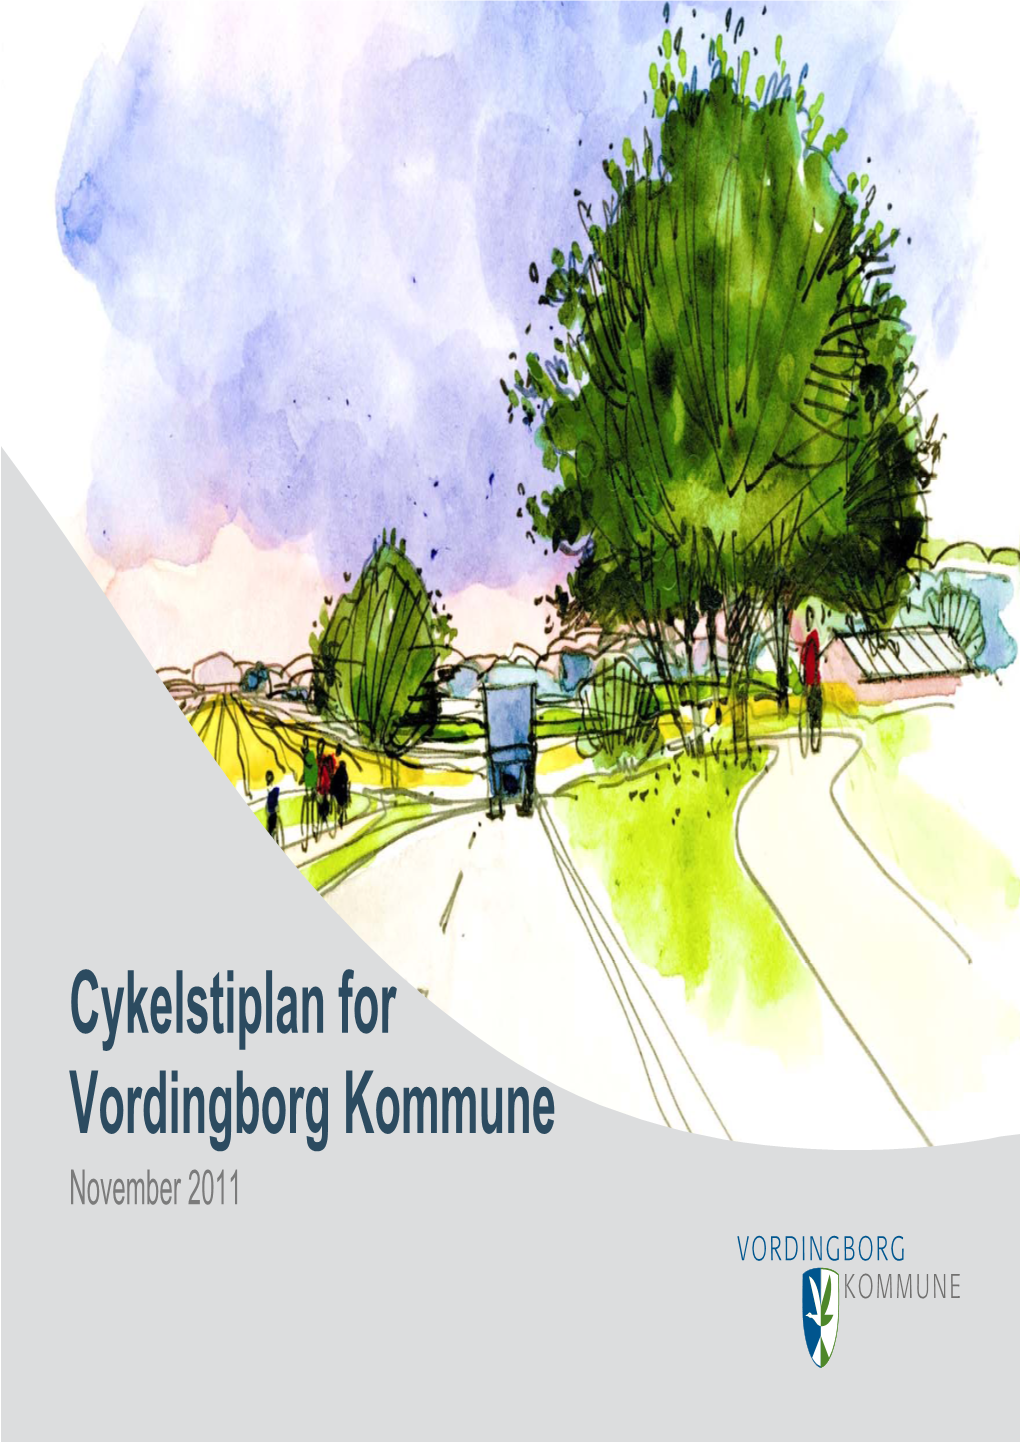 Cykelstiplan for Vordingborg Kommune November 2011